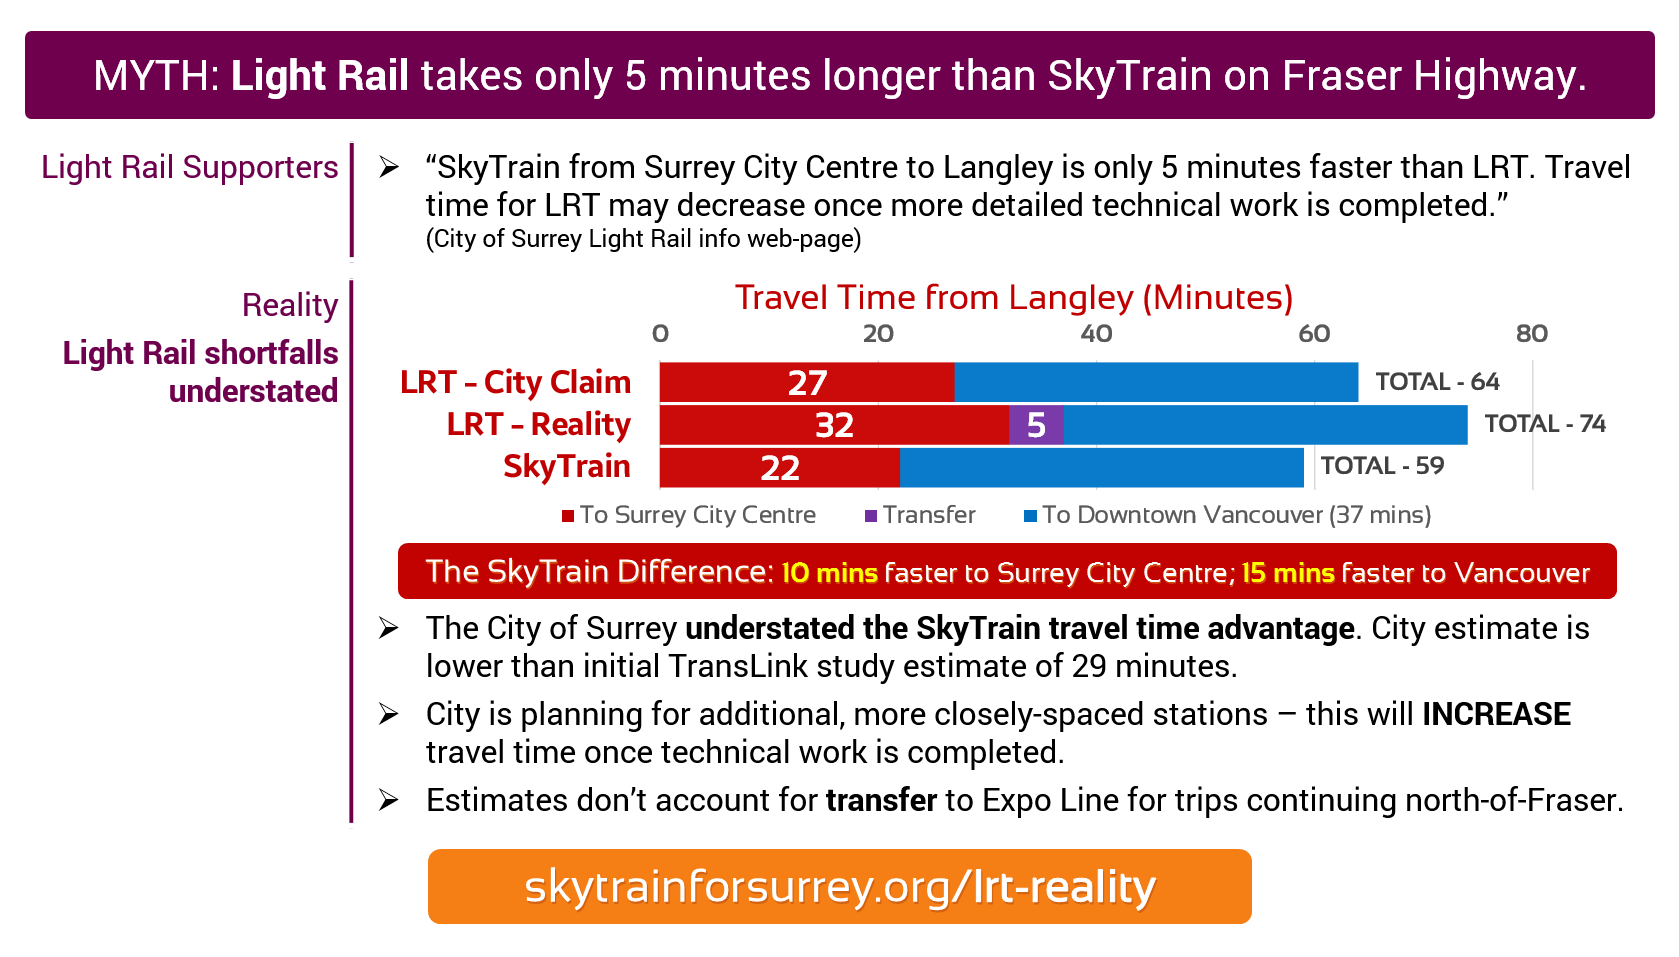 MYTH: Light Rail takes only 5 minutes longer than SkyTrain on Fraser Highway. REALITY: Light Rail shortfalls understated.